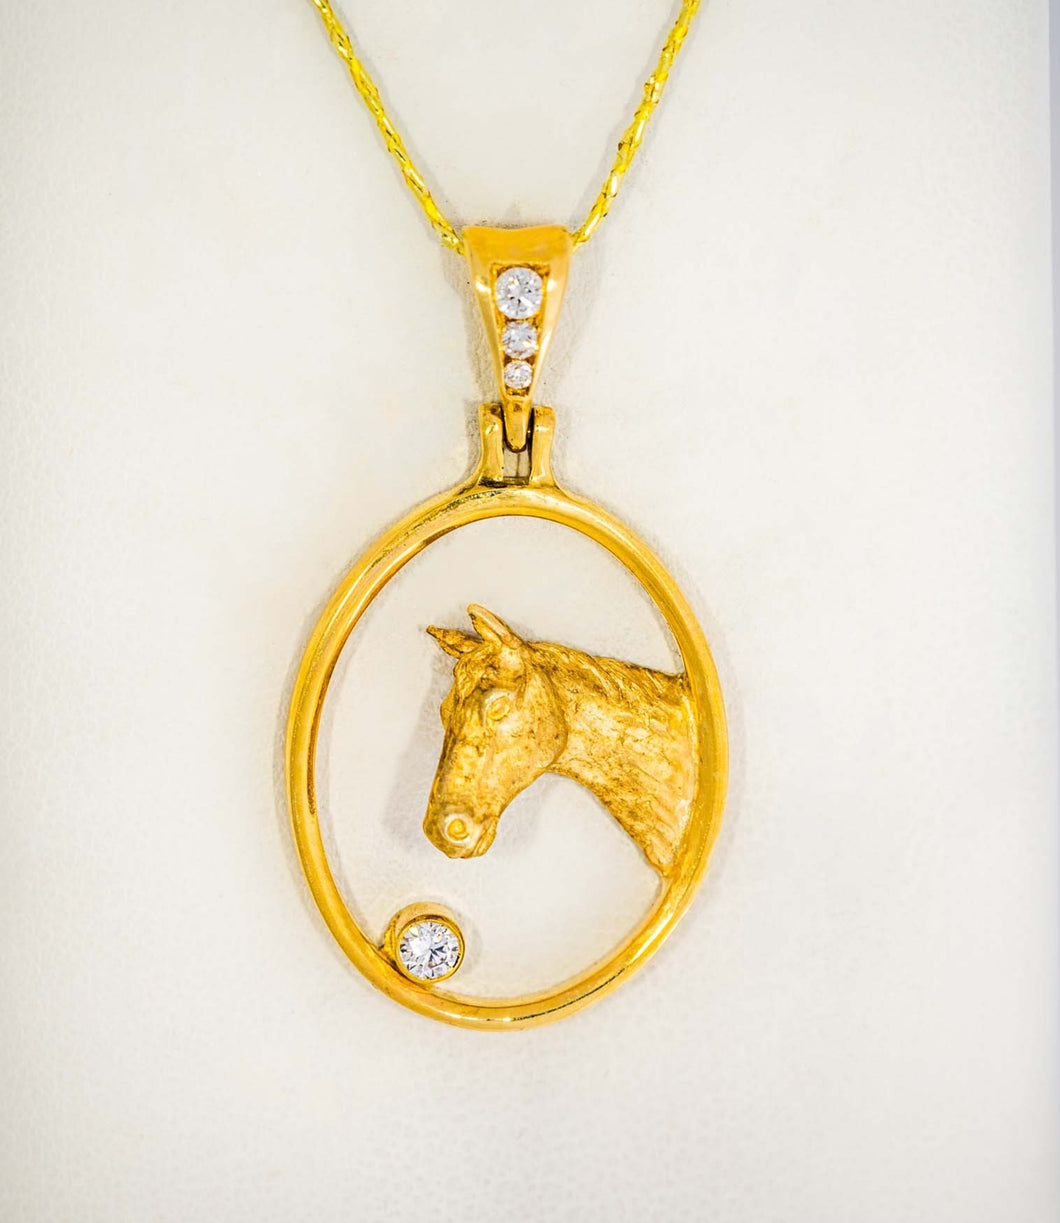 Gold Horse Pendant by Paul Iwanaga